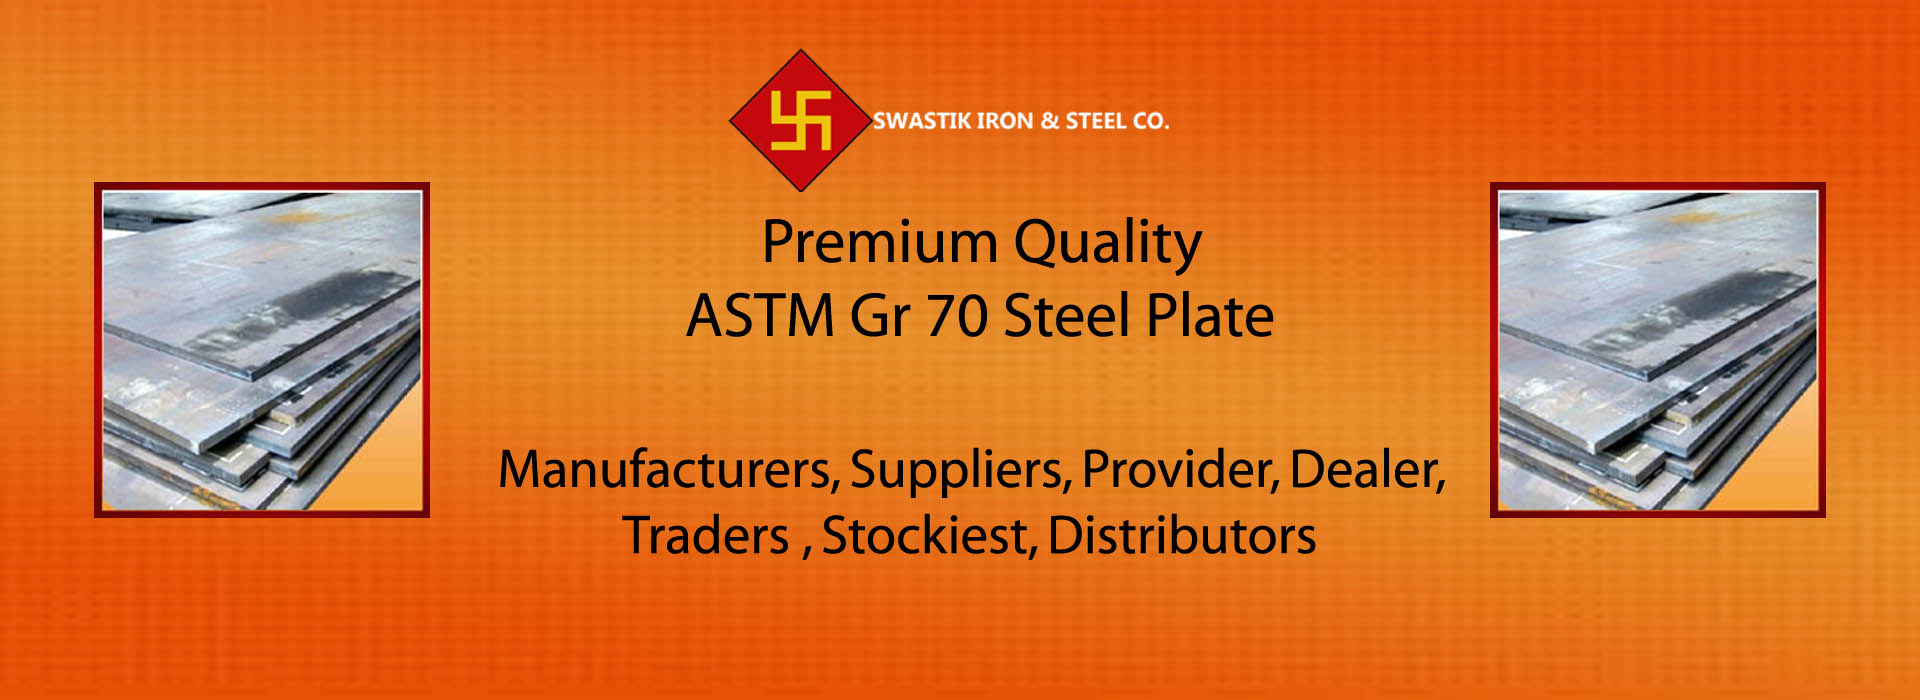 ASTM Gr 70 Steel Plate